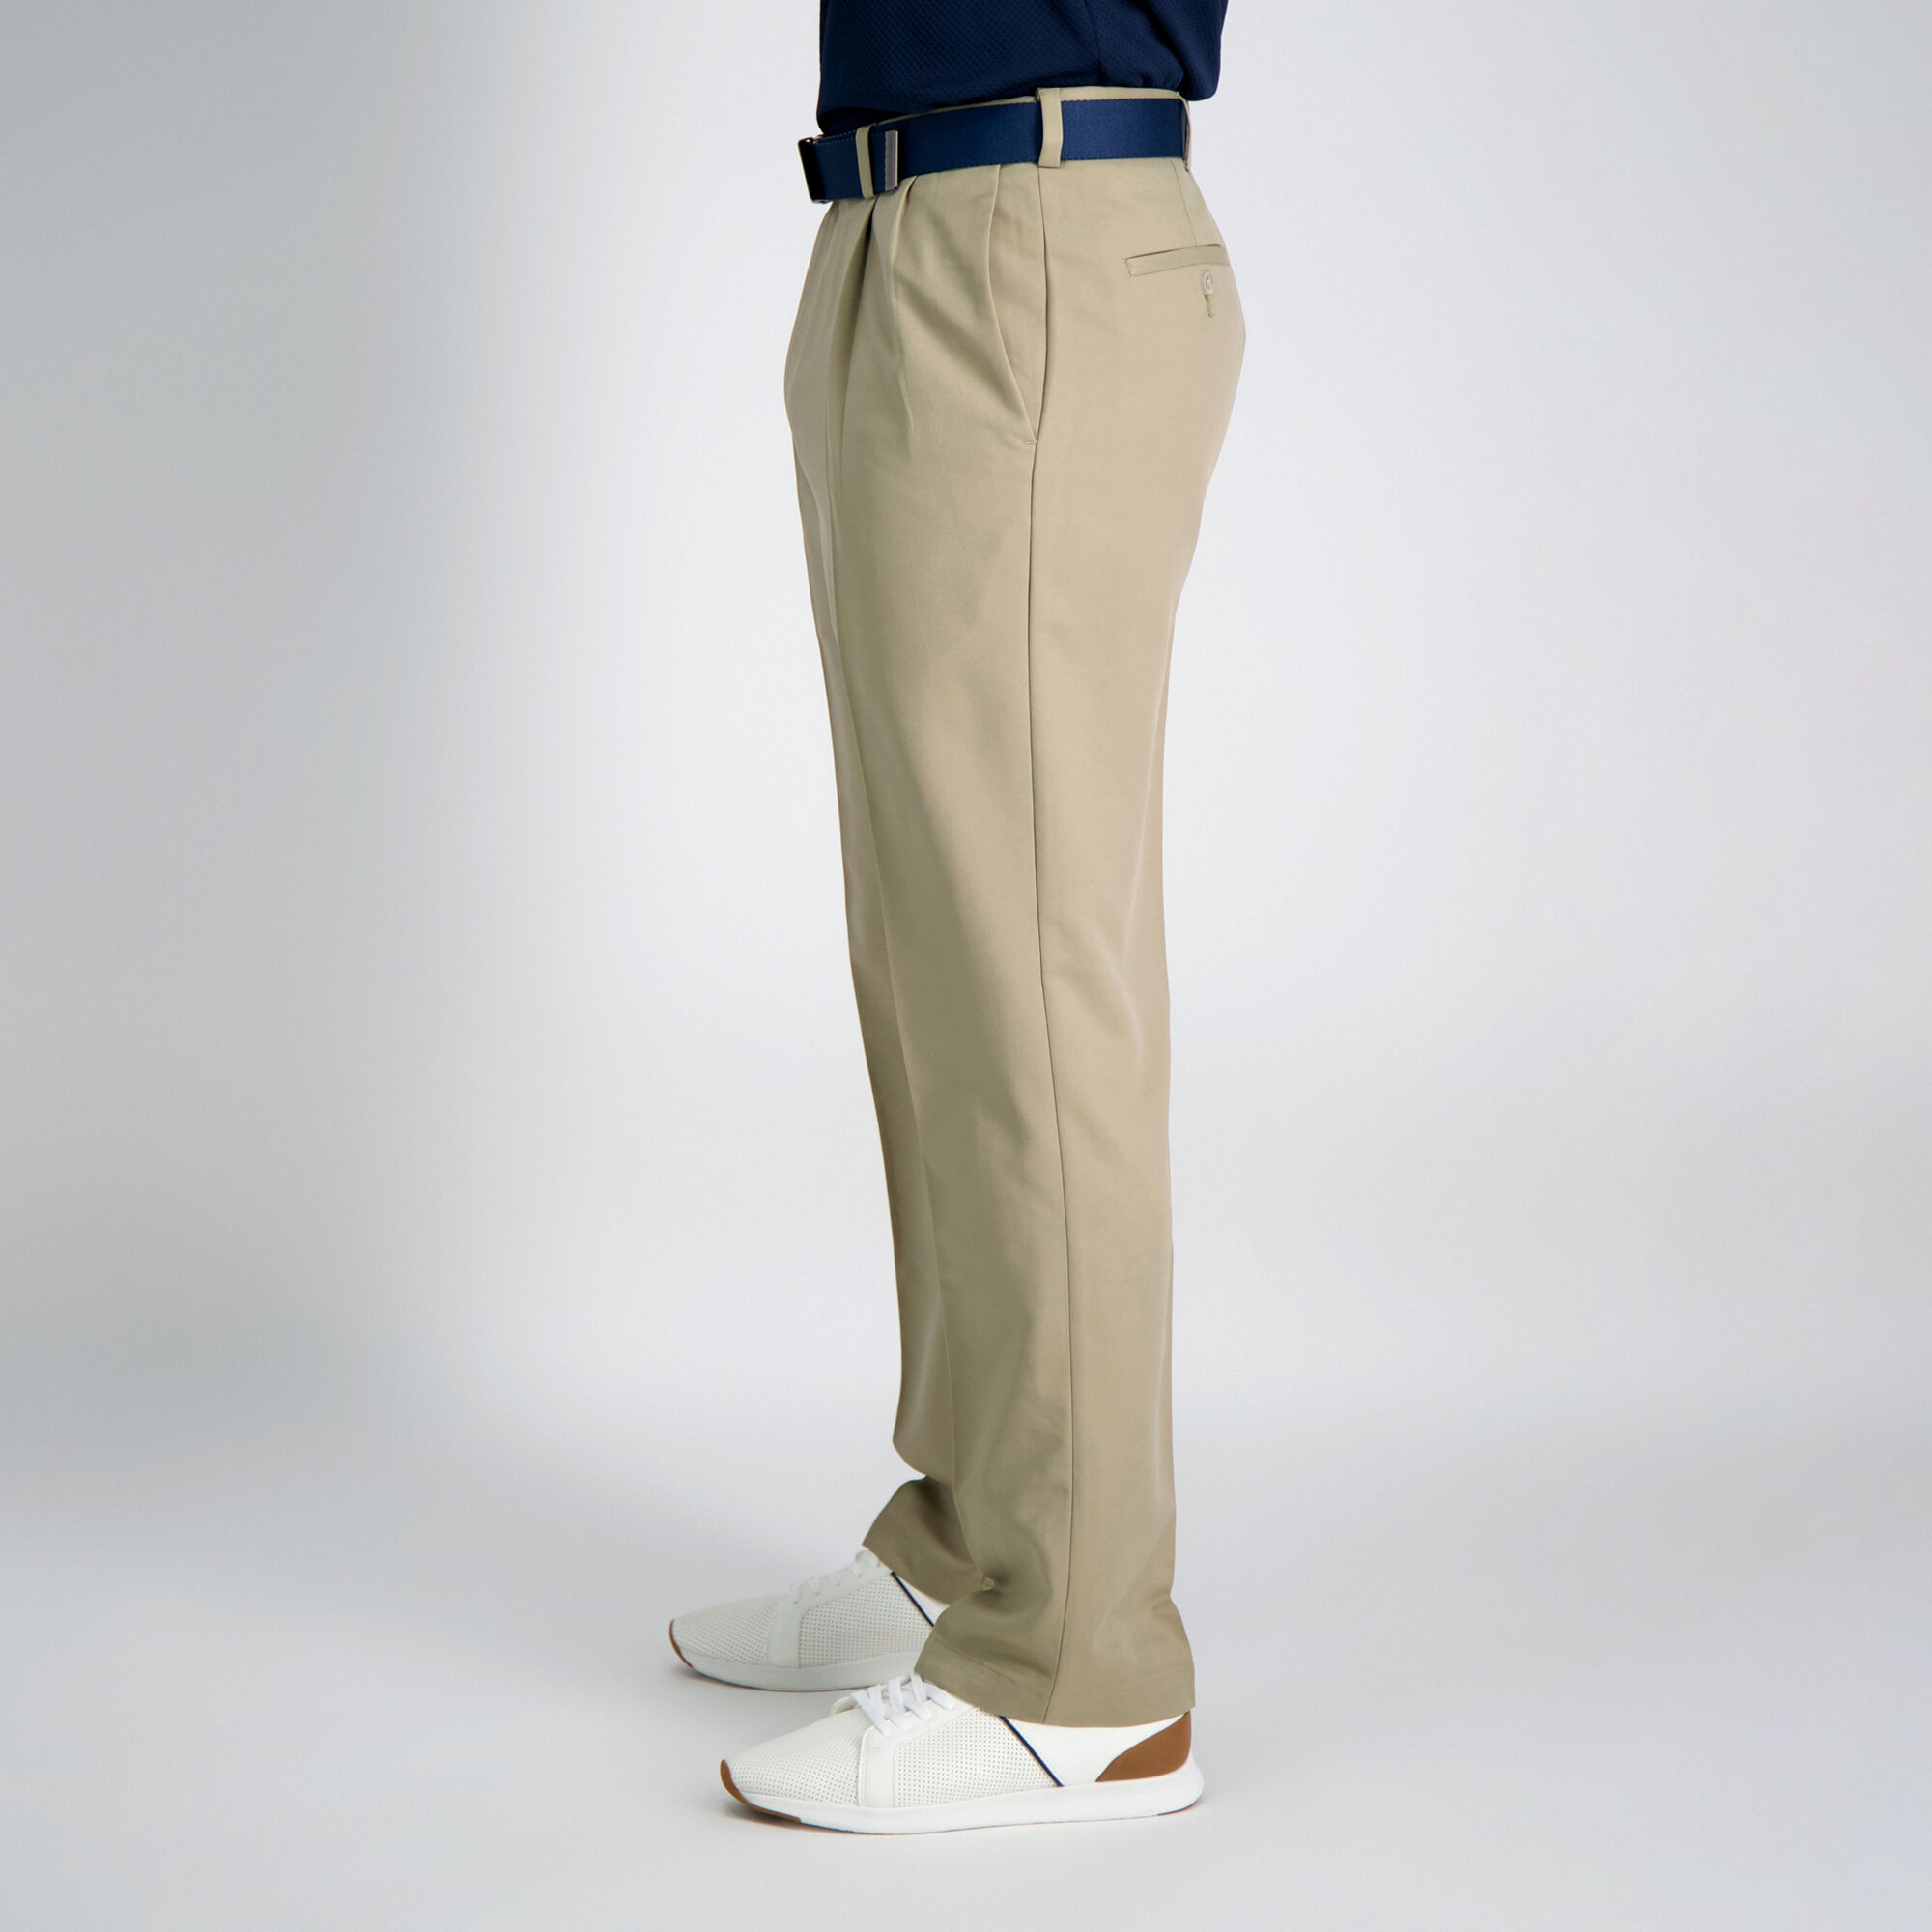 Men's Classic Fit Pants - Classic Fit Pant Styles | Haggar